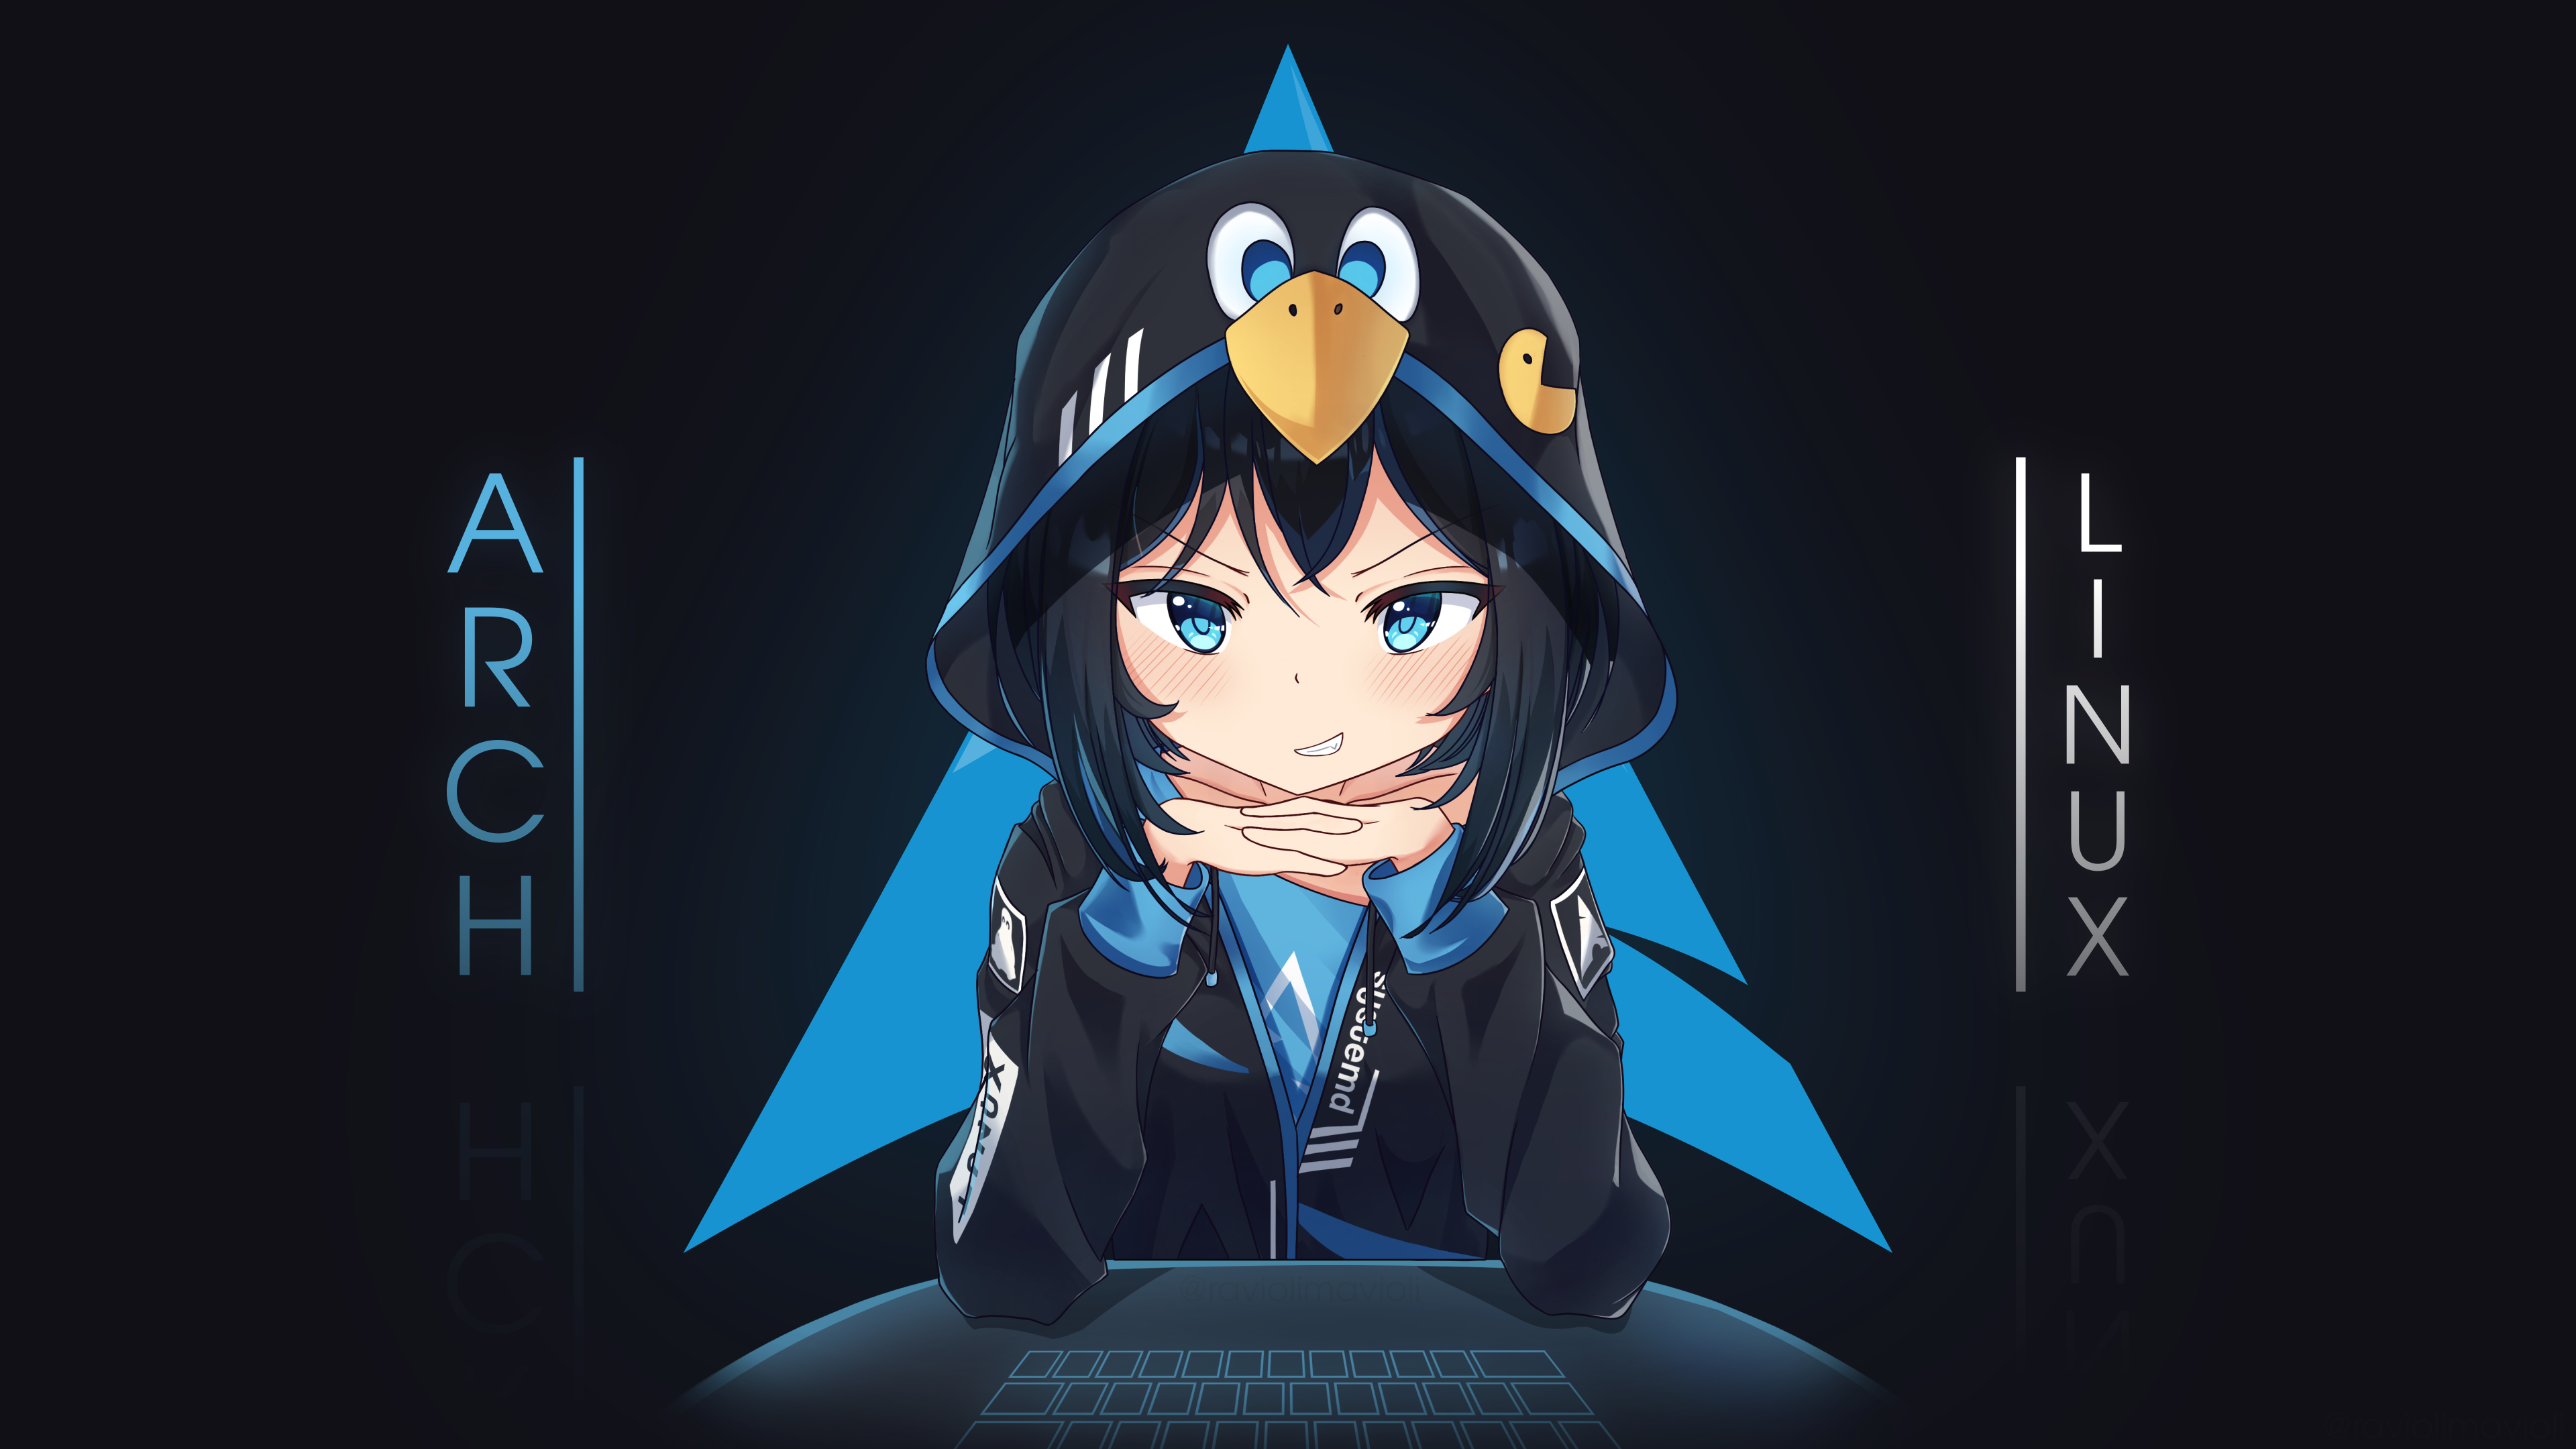 Anime Anime Girls Technology Software Arch Linux Dark Background White Skin Blue Eyes Fan Art Wallpaper:3840x2160